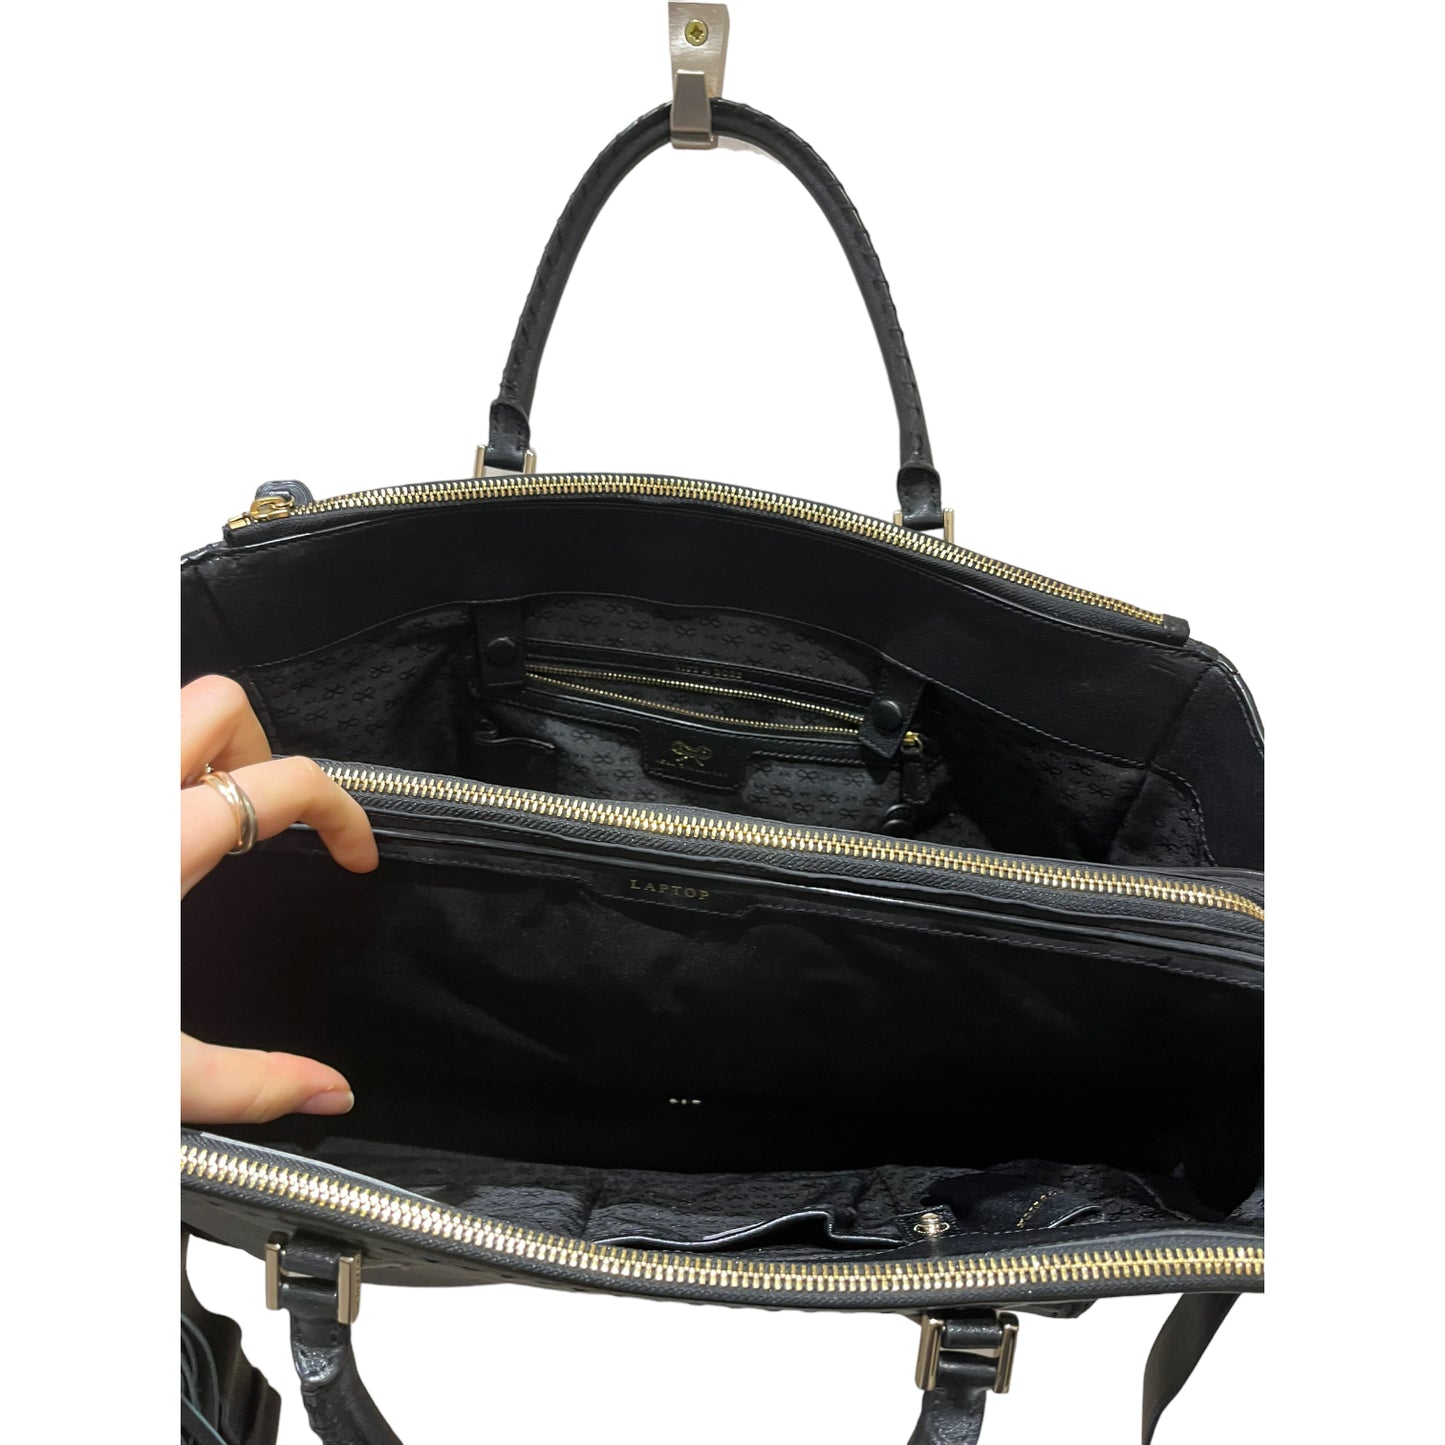 Anya Hindmarch Black Bag with Laptop Bag